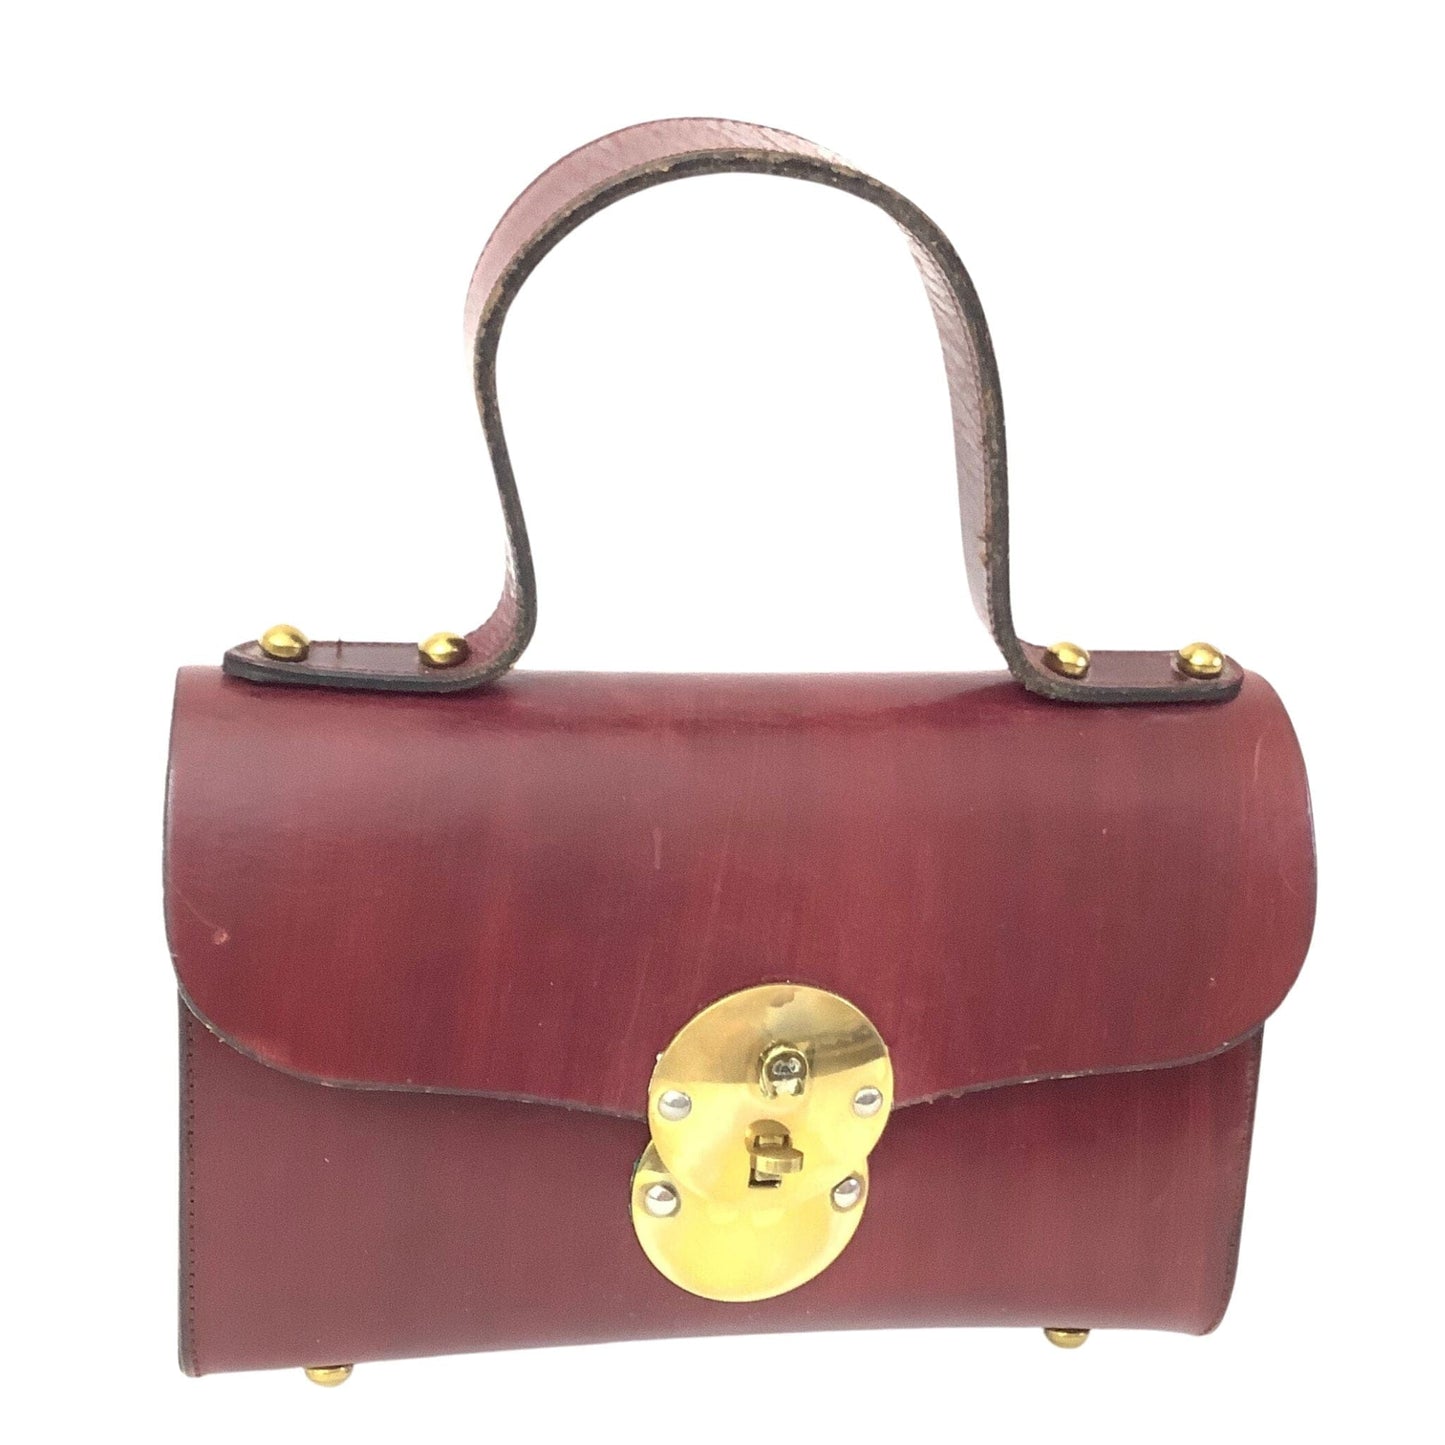 Vintage Aigner Mini Bag Burgundy / Leather / Vintage 1960s